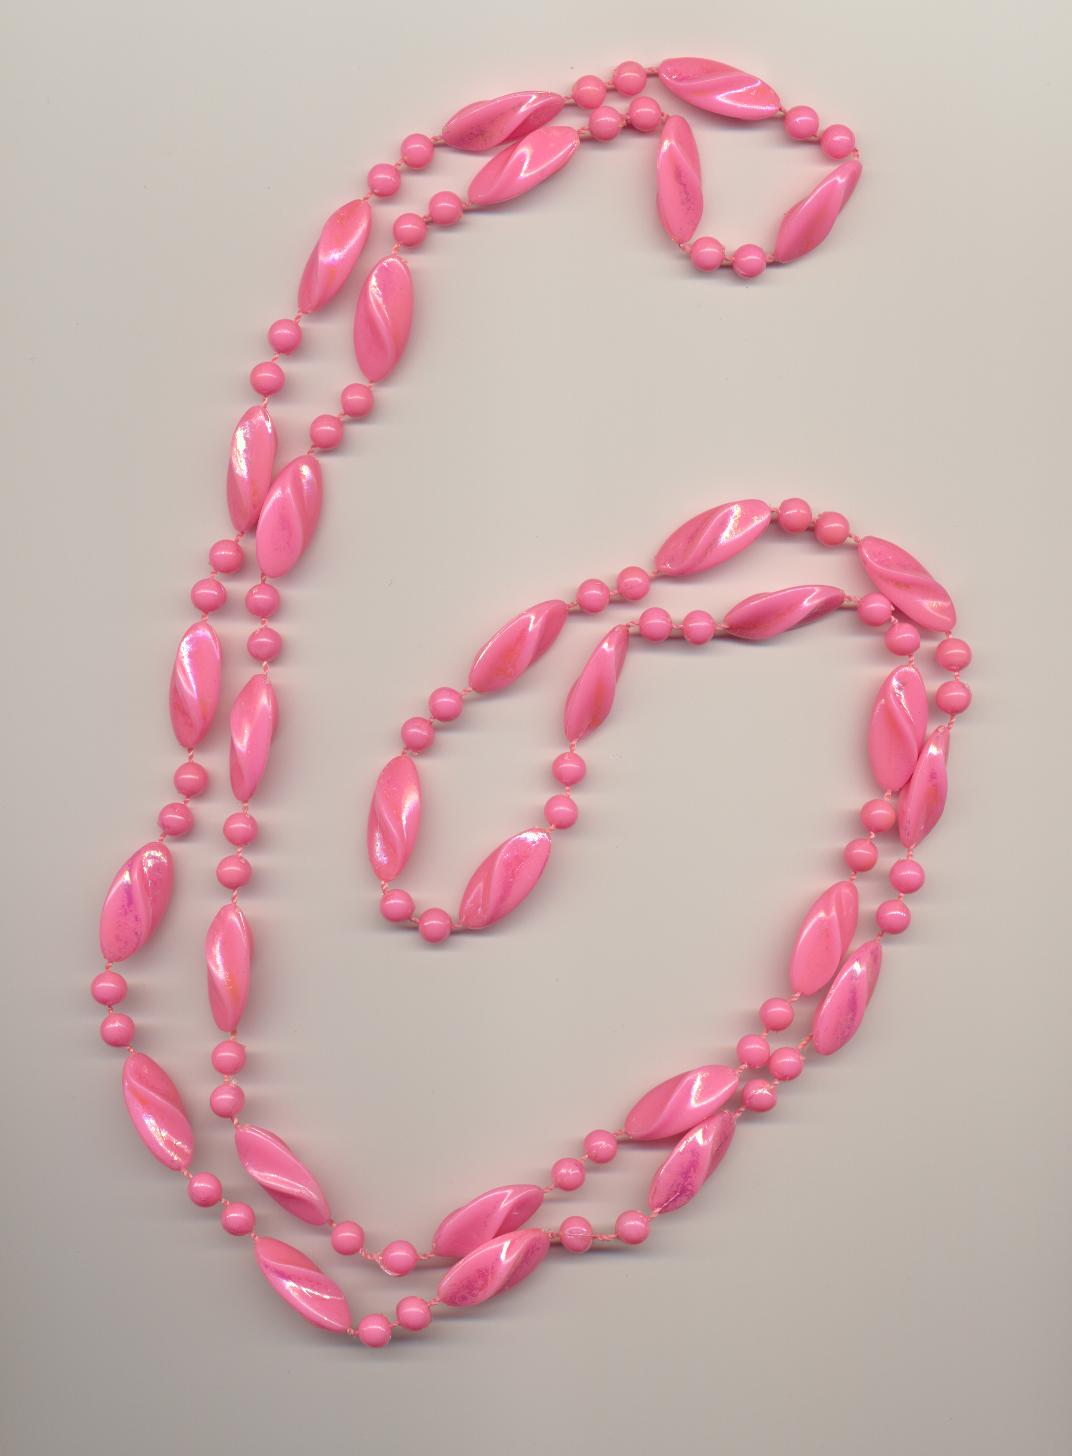 Pink color long plastic imitation bead necklace, 1980's, length 47'' 120cm.